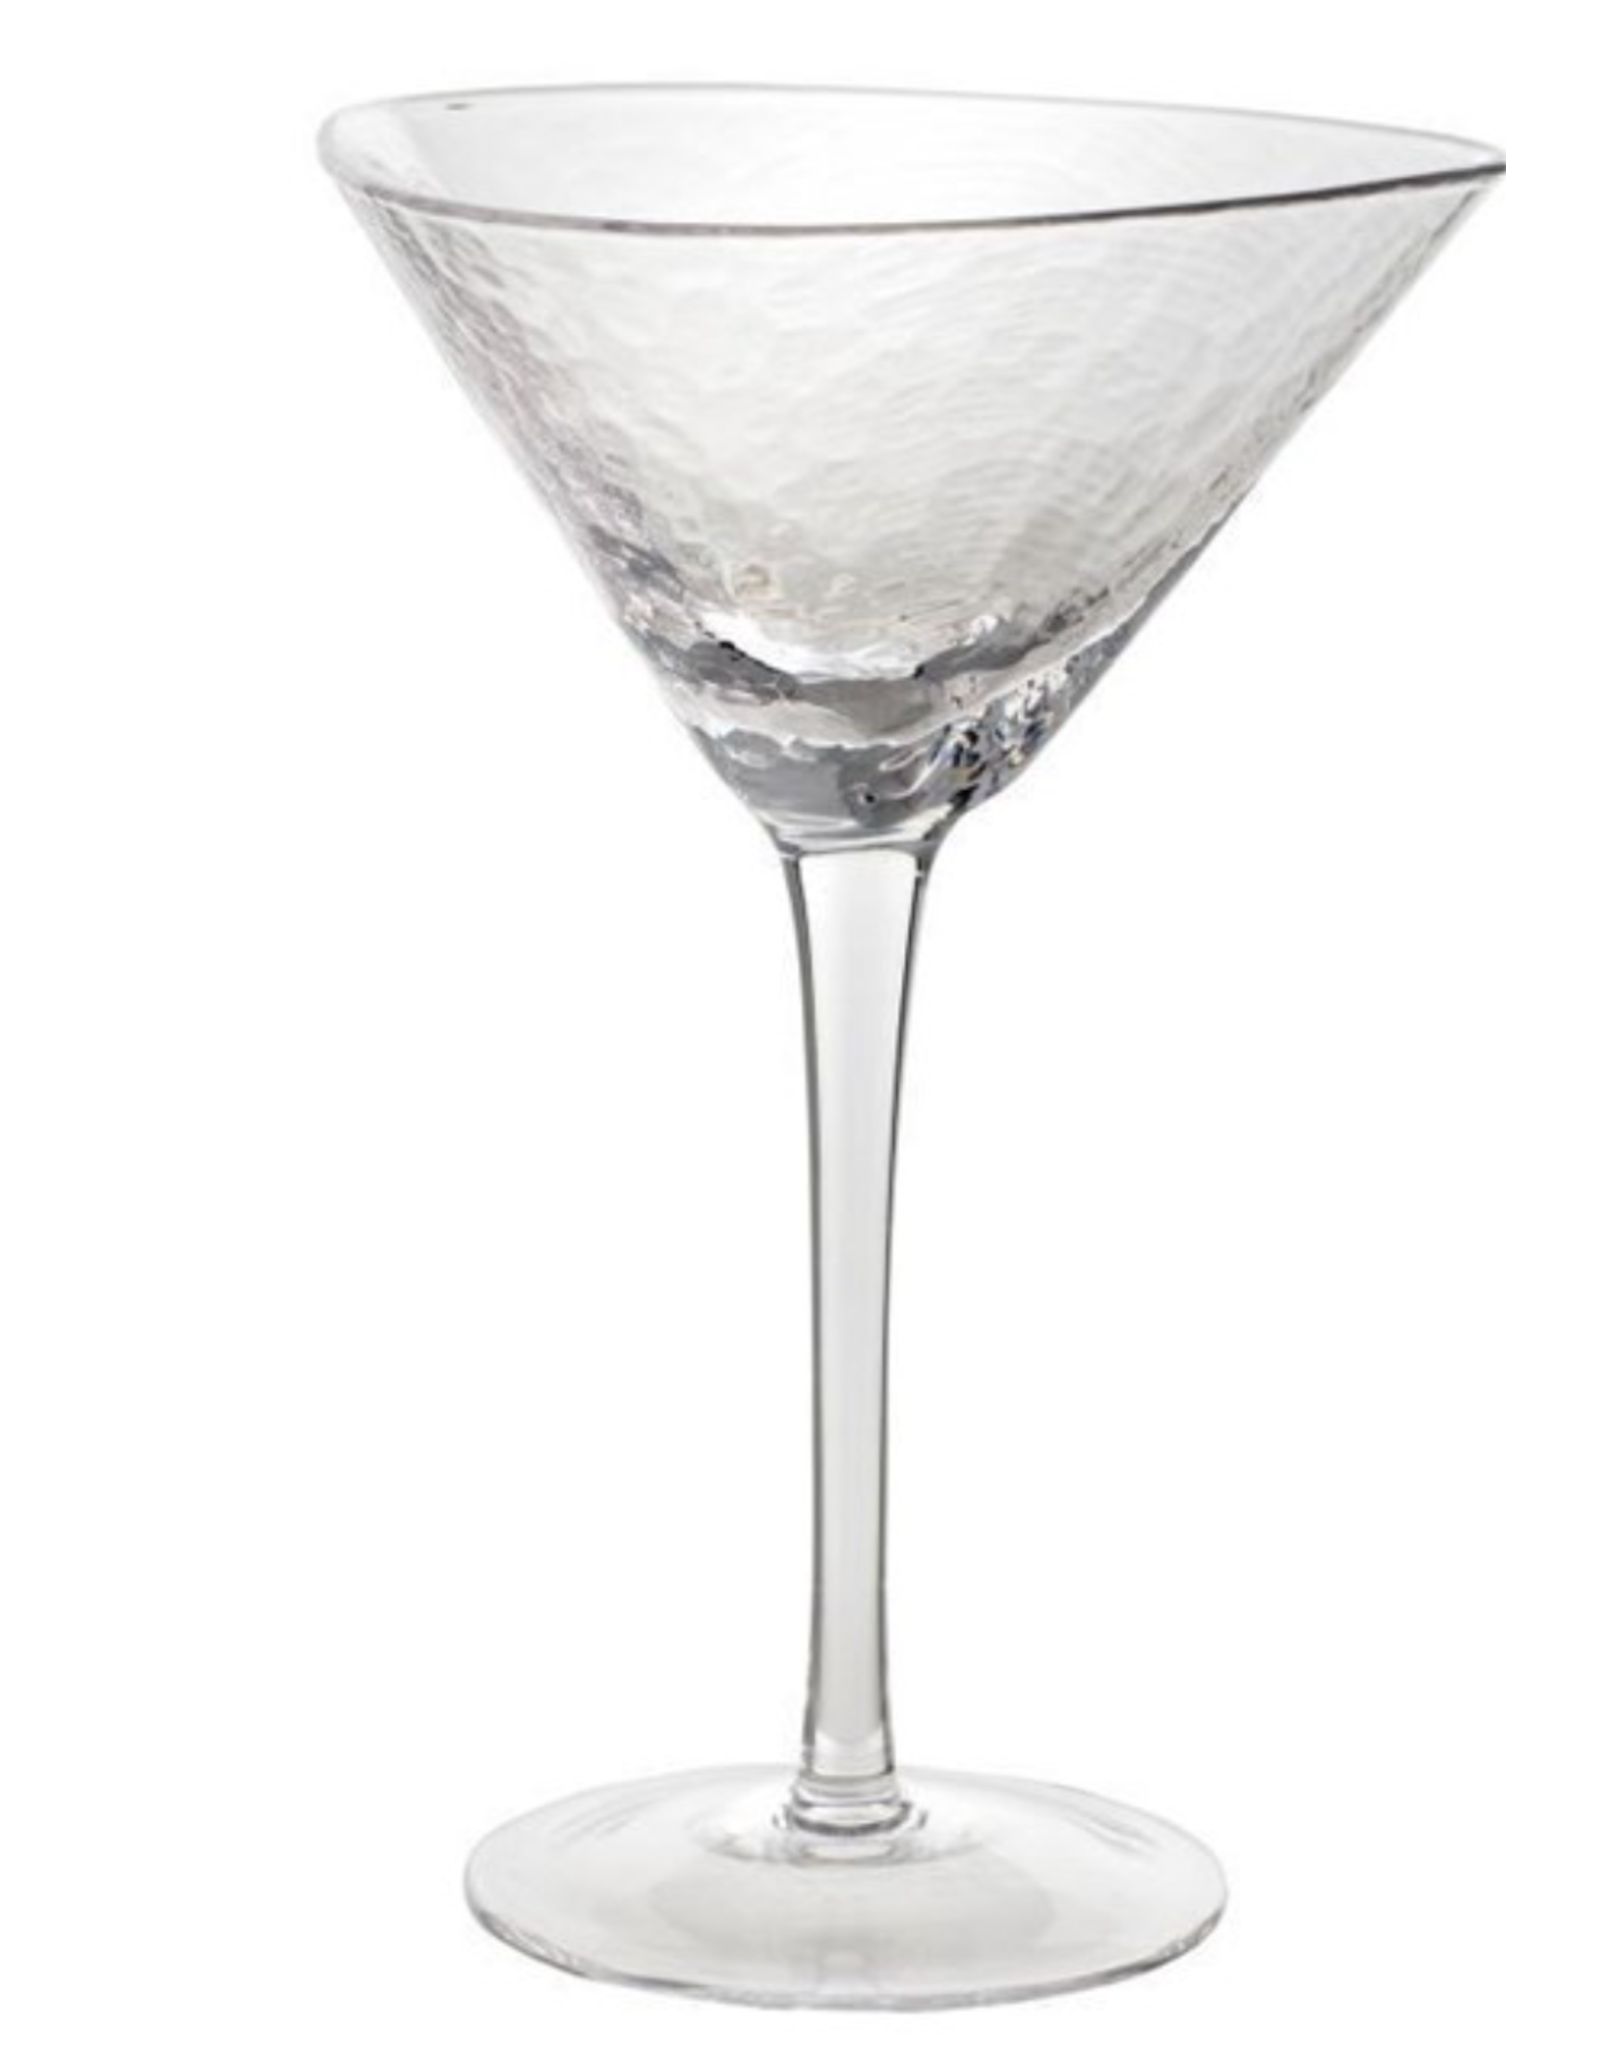 Texxture Serapha Martini Glass